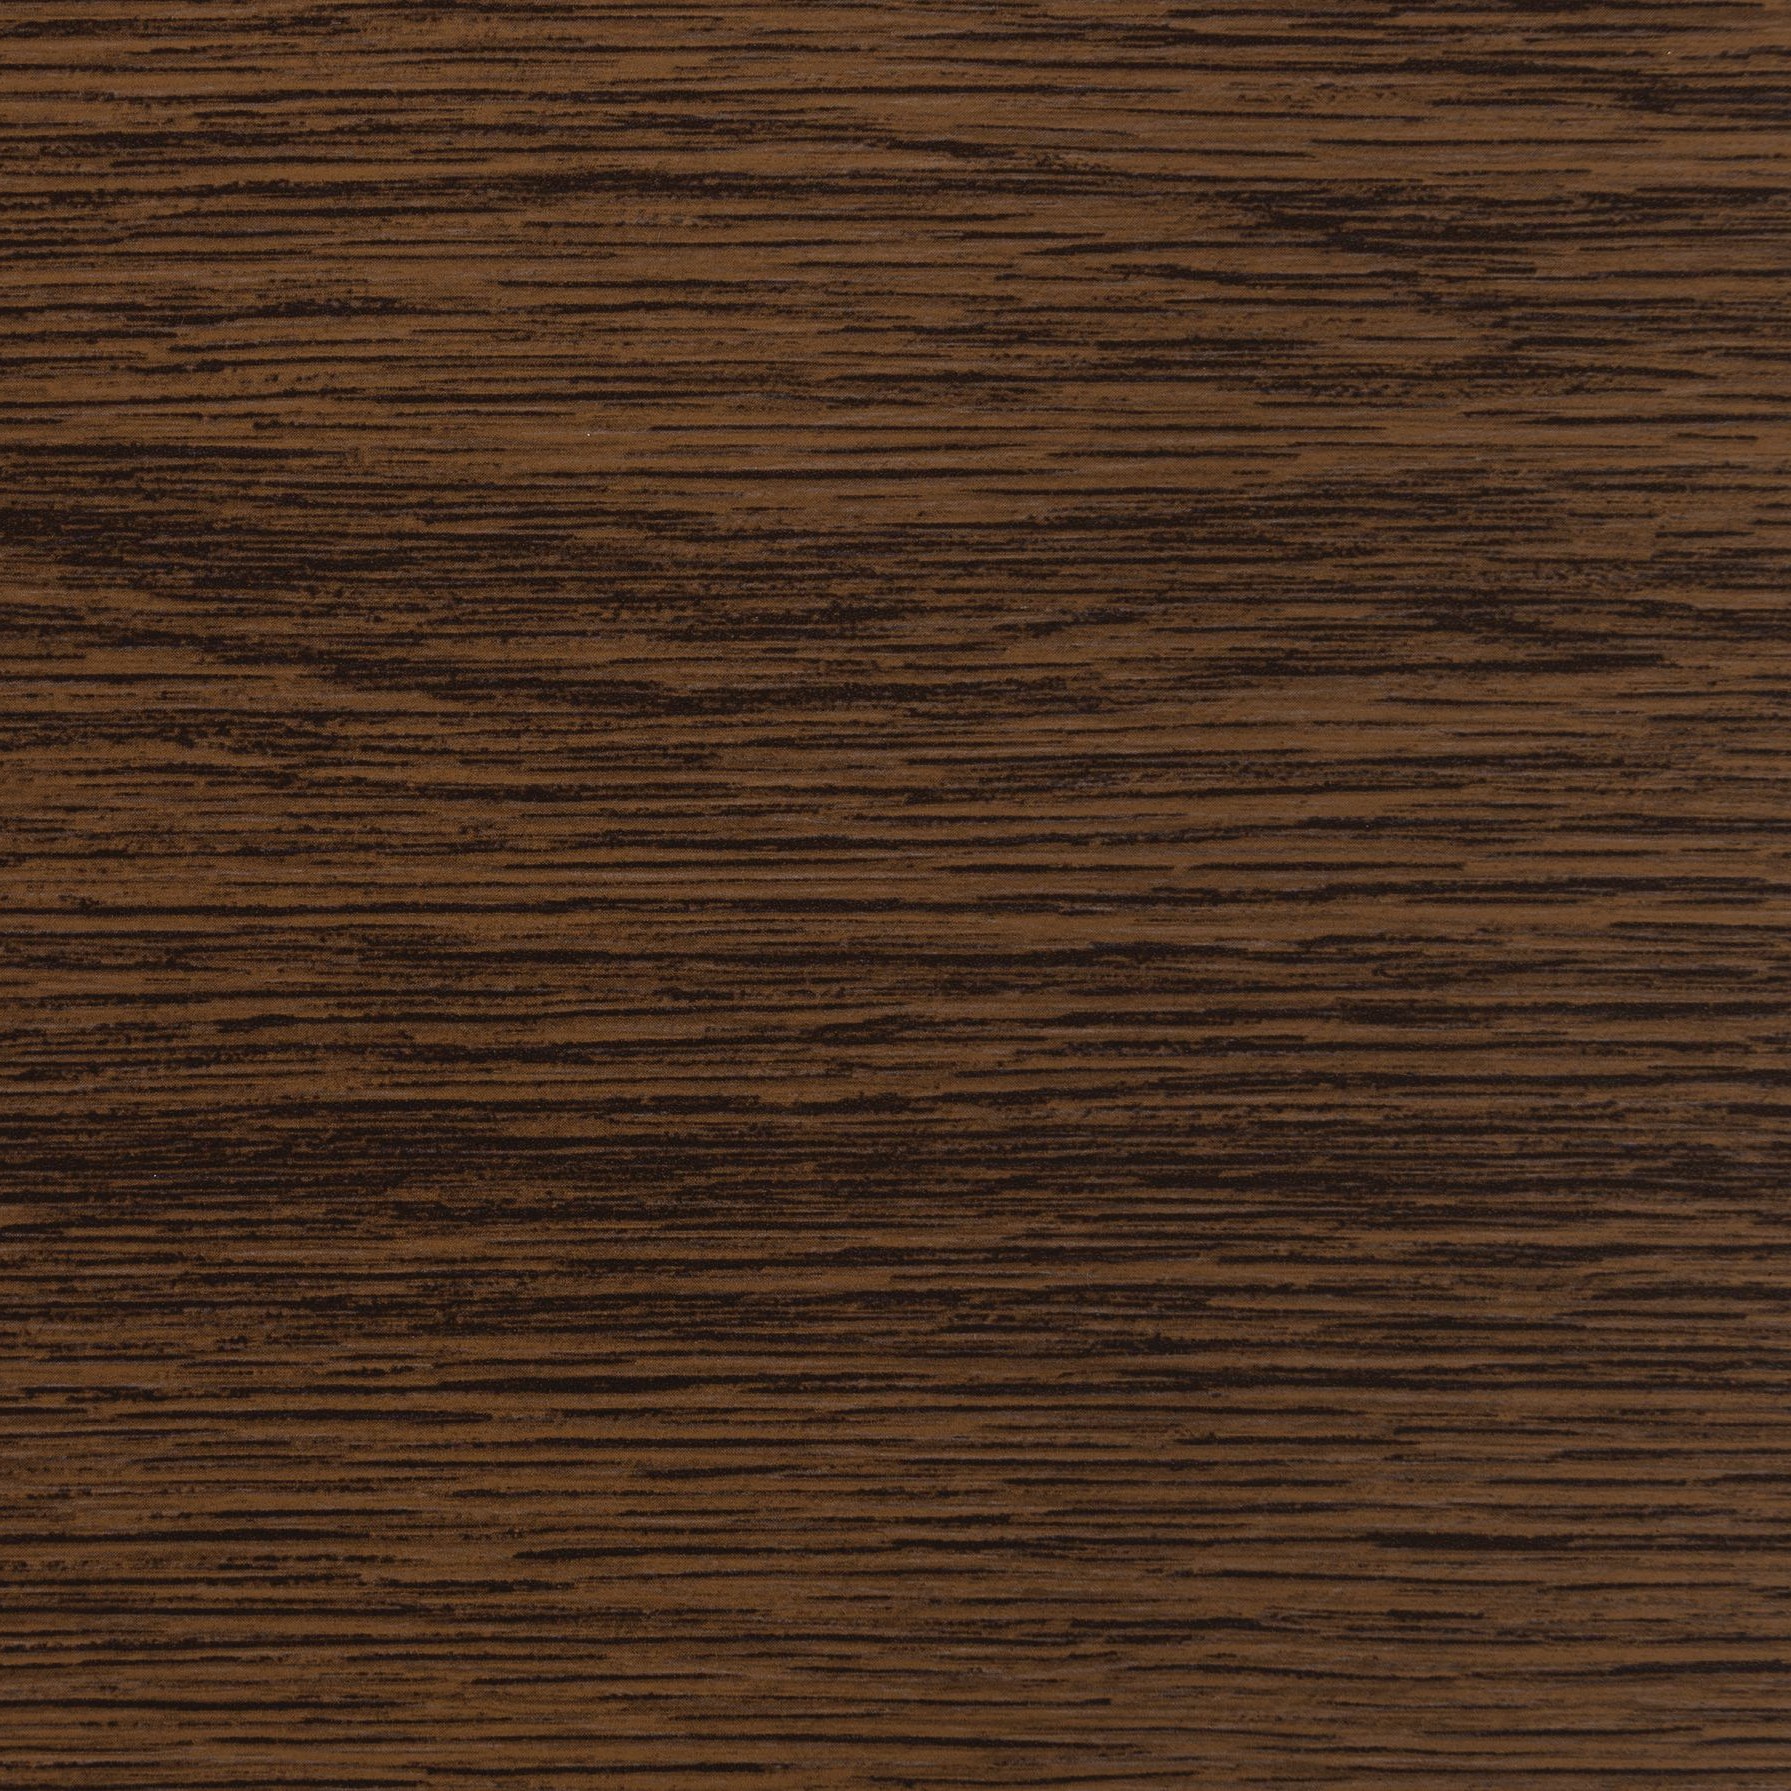 Swatch of close up UniCote LUX Ashwood woodgrain texture